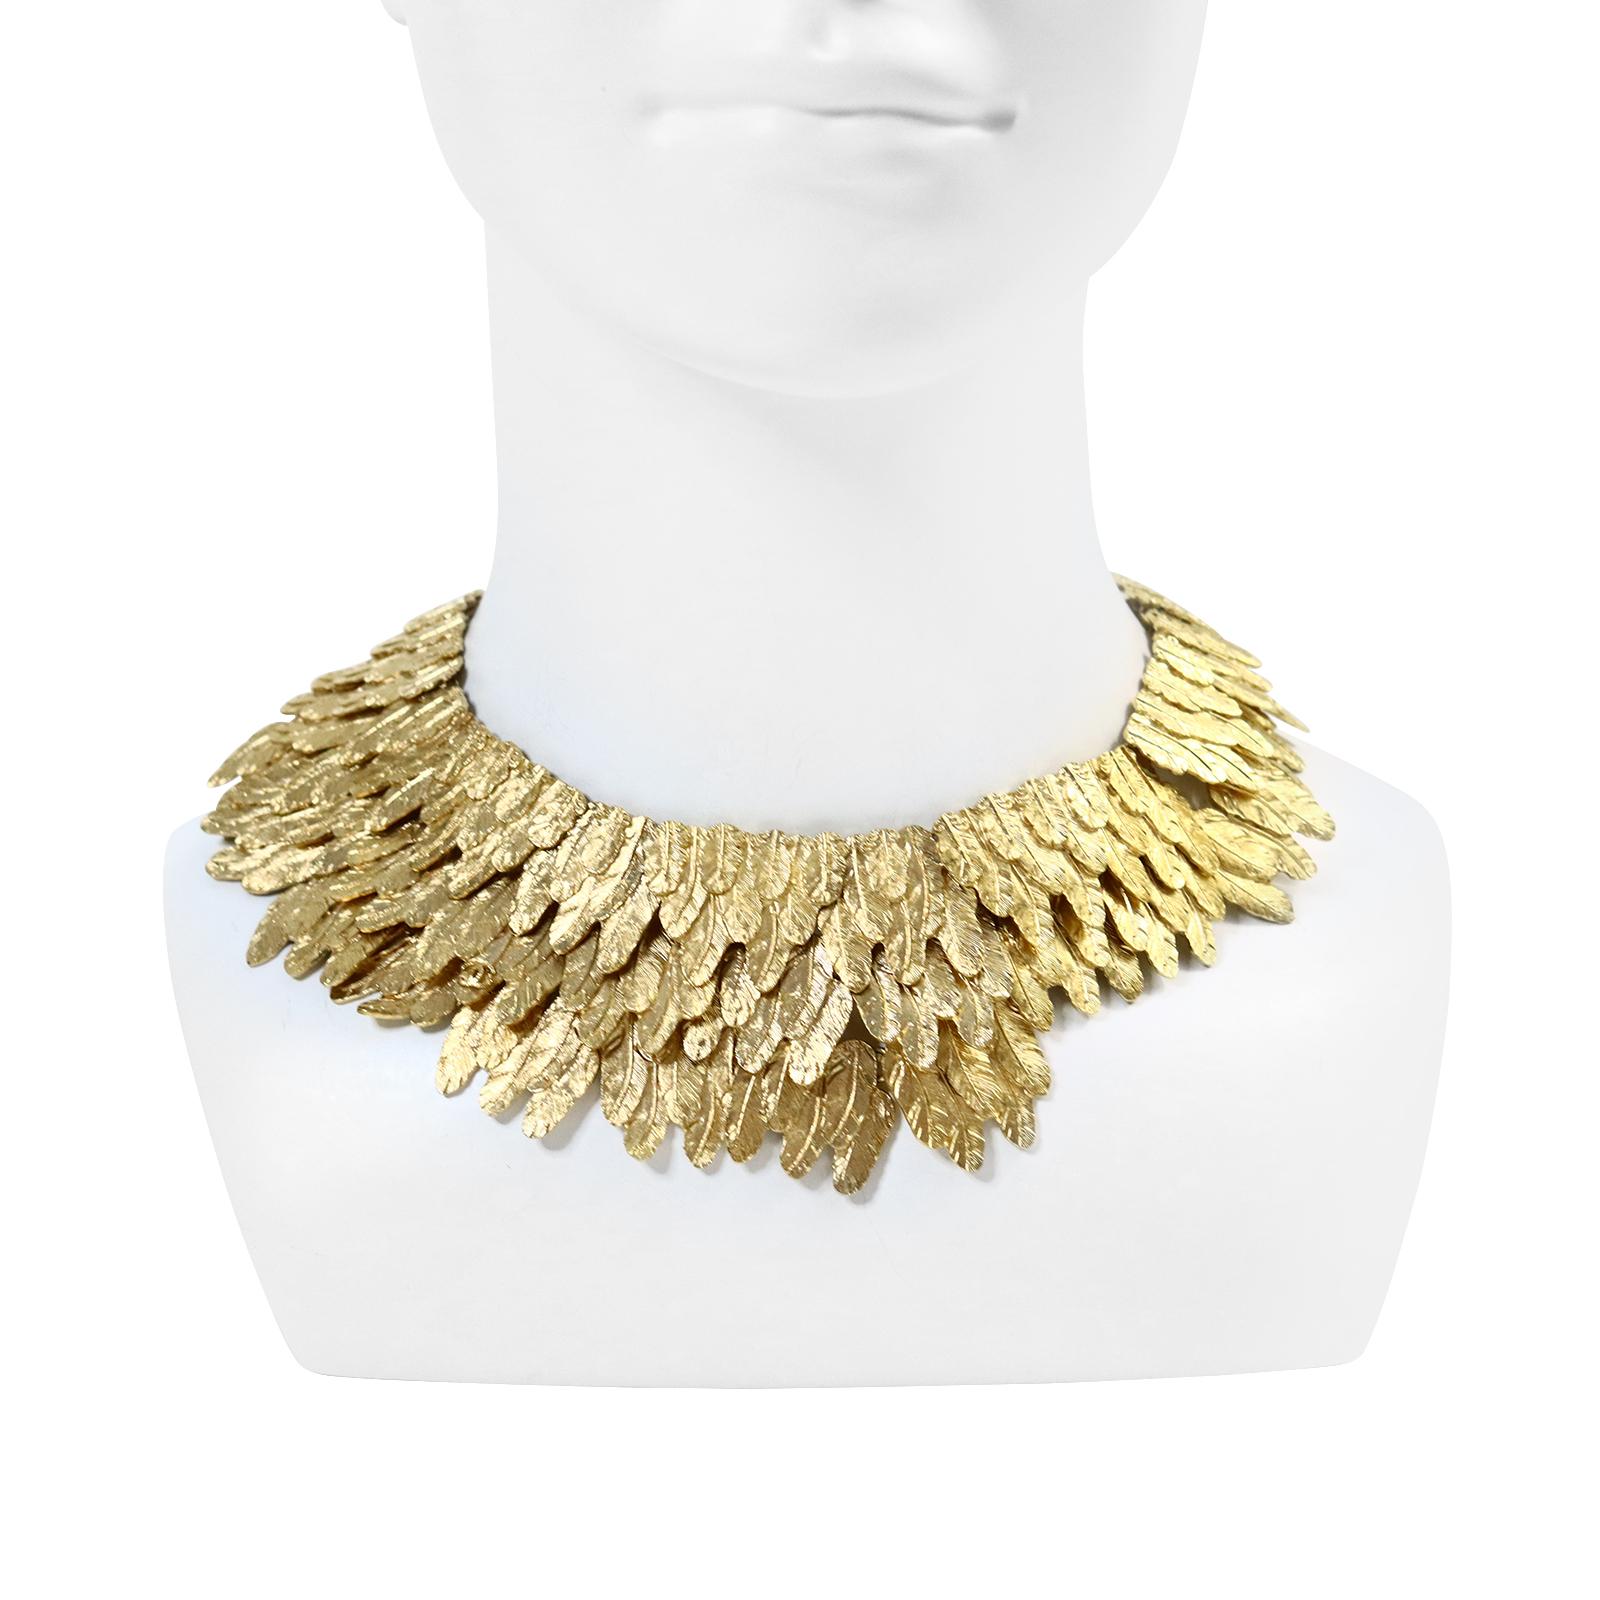 Artist Collectible Chanel Gold Collar Necklace Circa 2008 For Sale